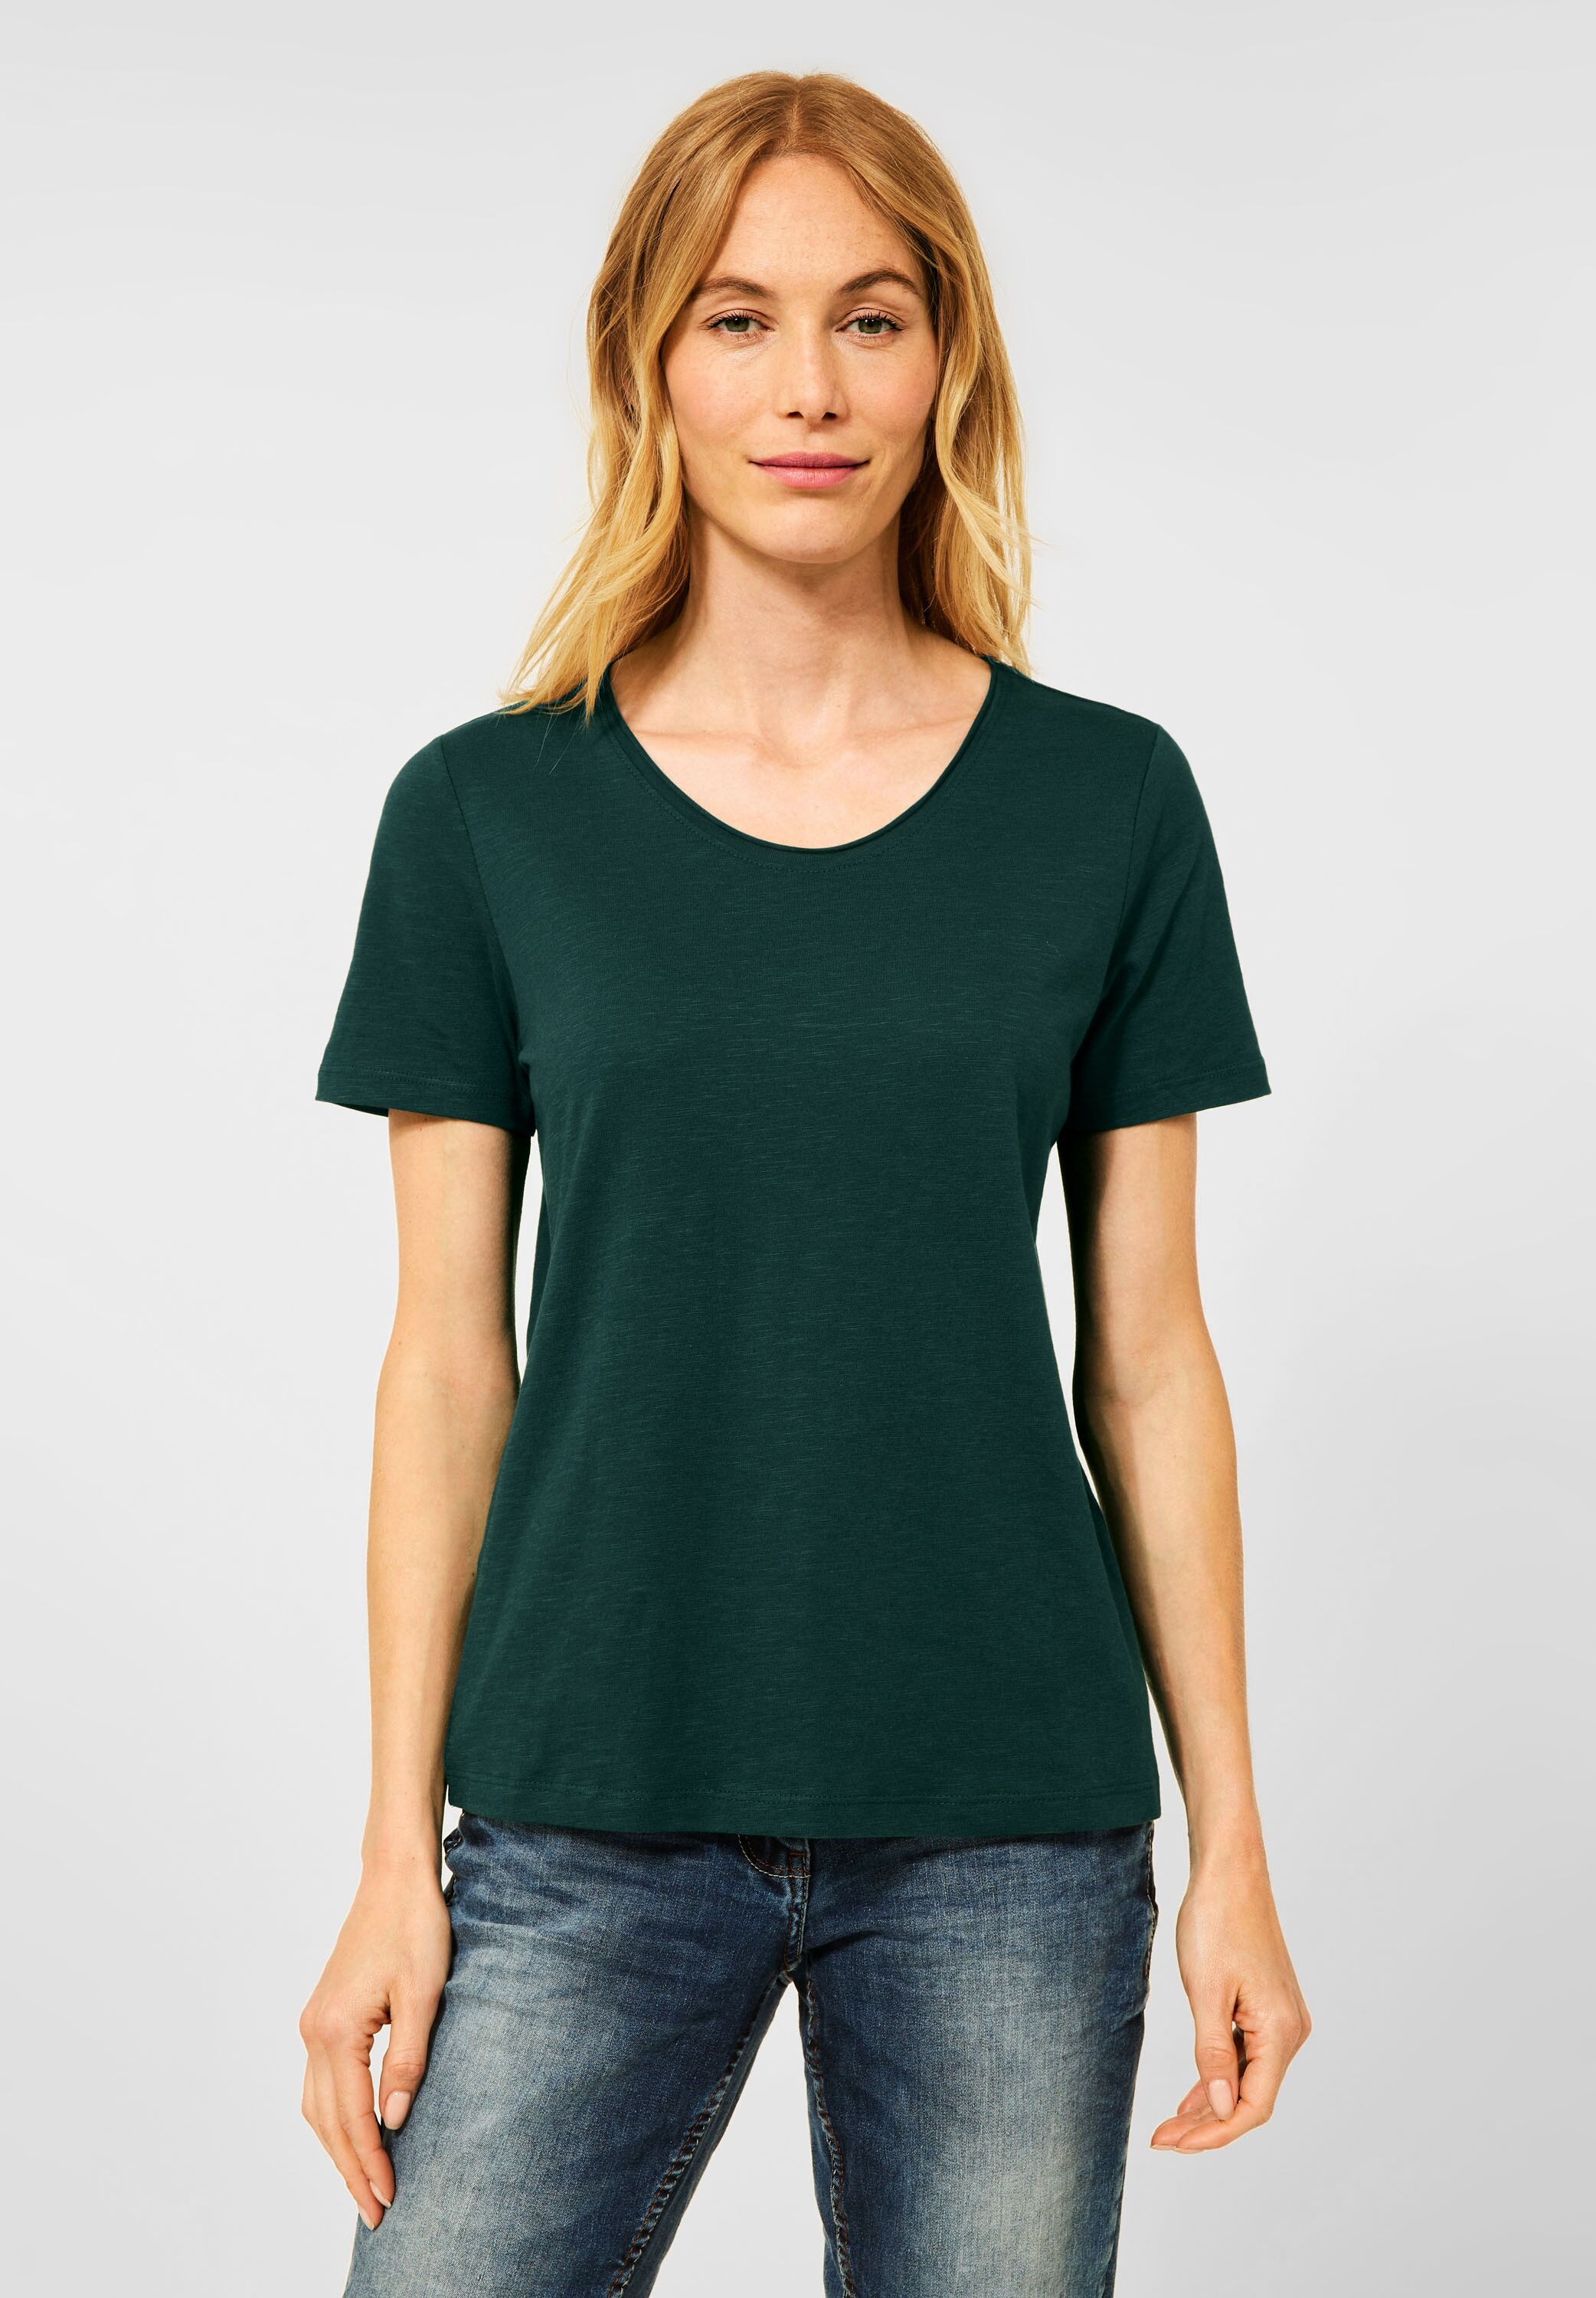 im - Ponderosa Green T-Shirt in reduziert CONCEPT Mode Pine SALE CECIL B317596-13973